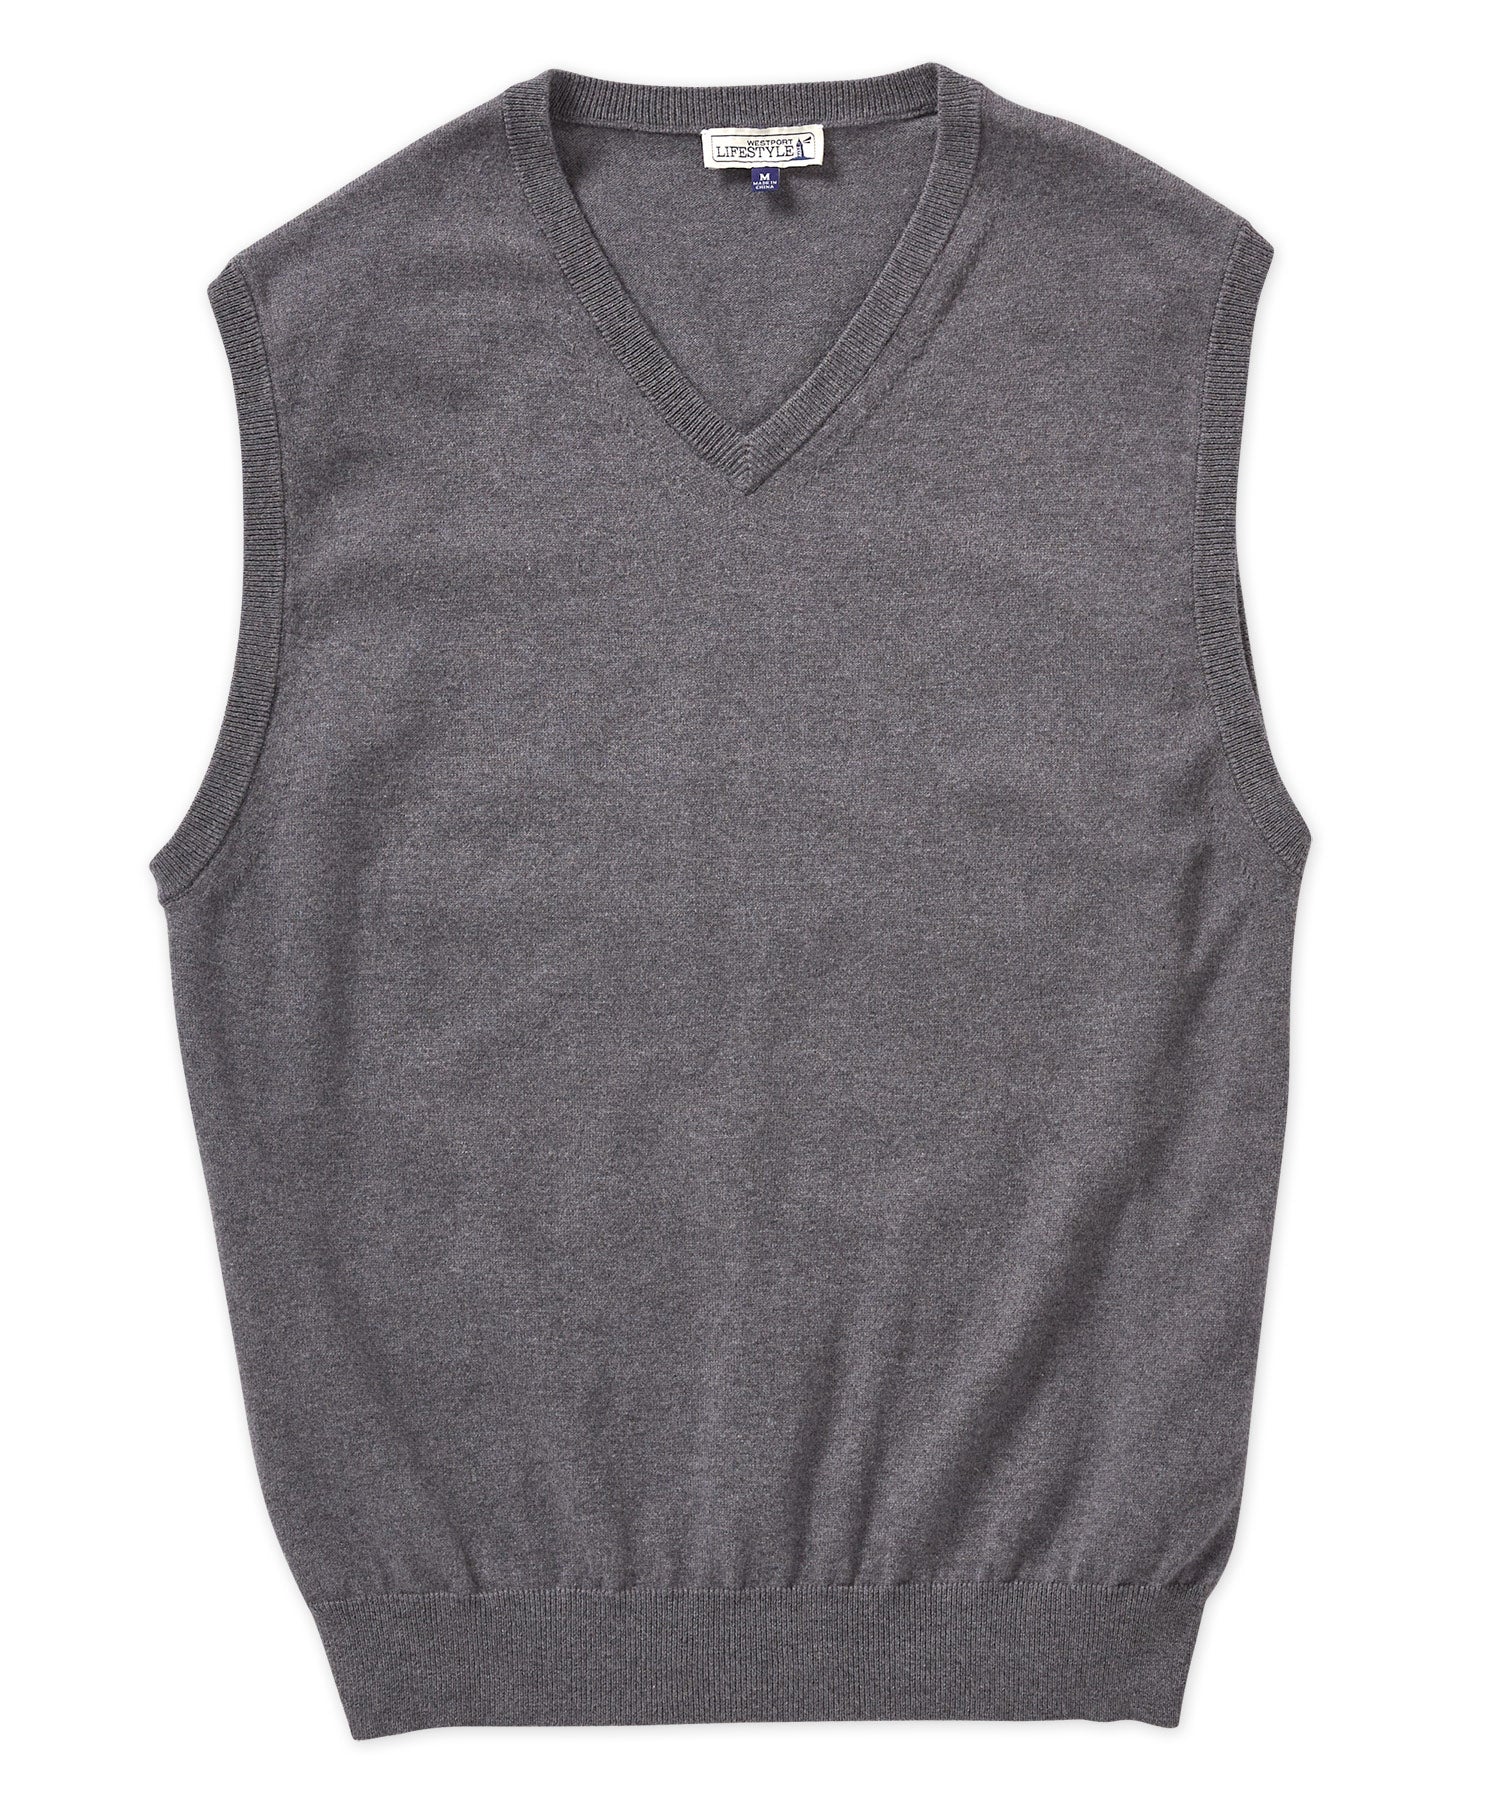 Westport Lifestyle Cotton Stretch V-Neck Sweater Vest, Men's Big & Tall